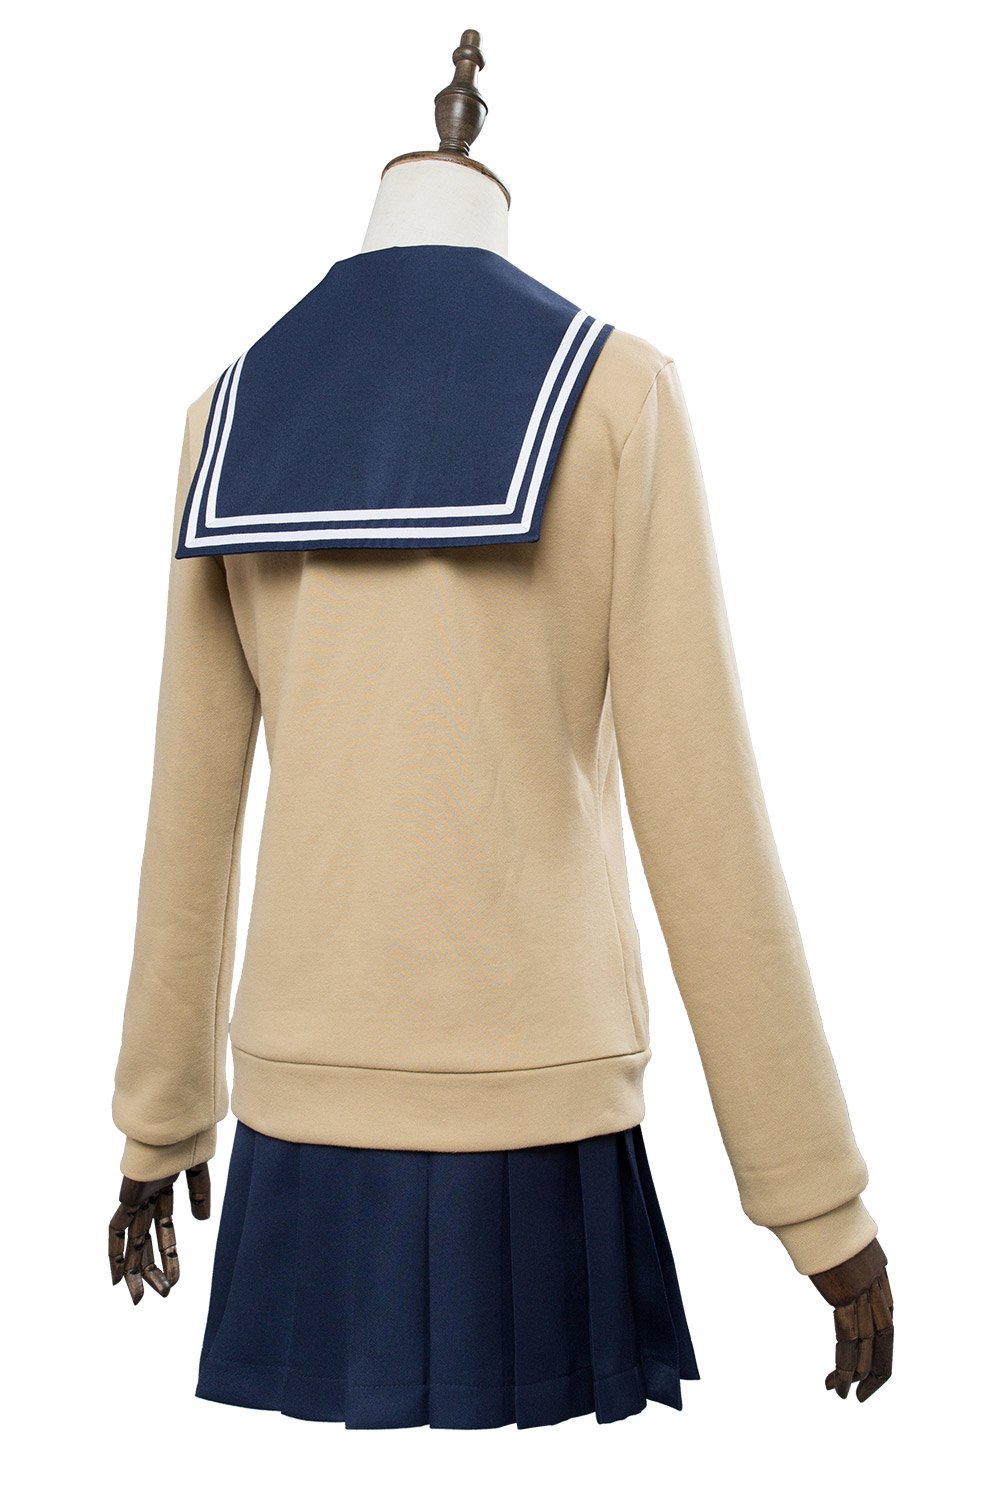 Boku no Hero Academia My Hero Academia Himiko Toga school Uniform Dress Cosplay costume